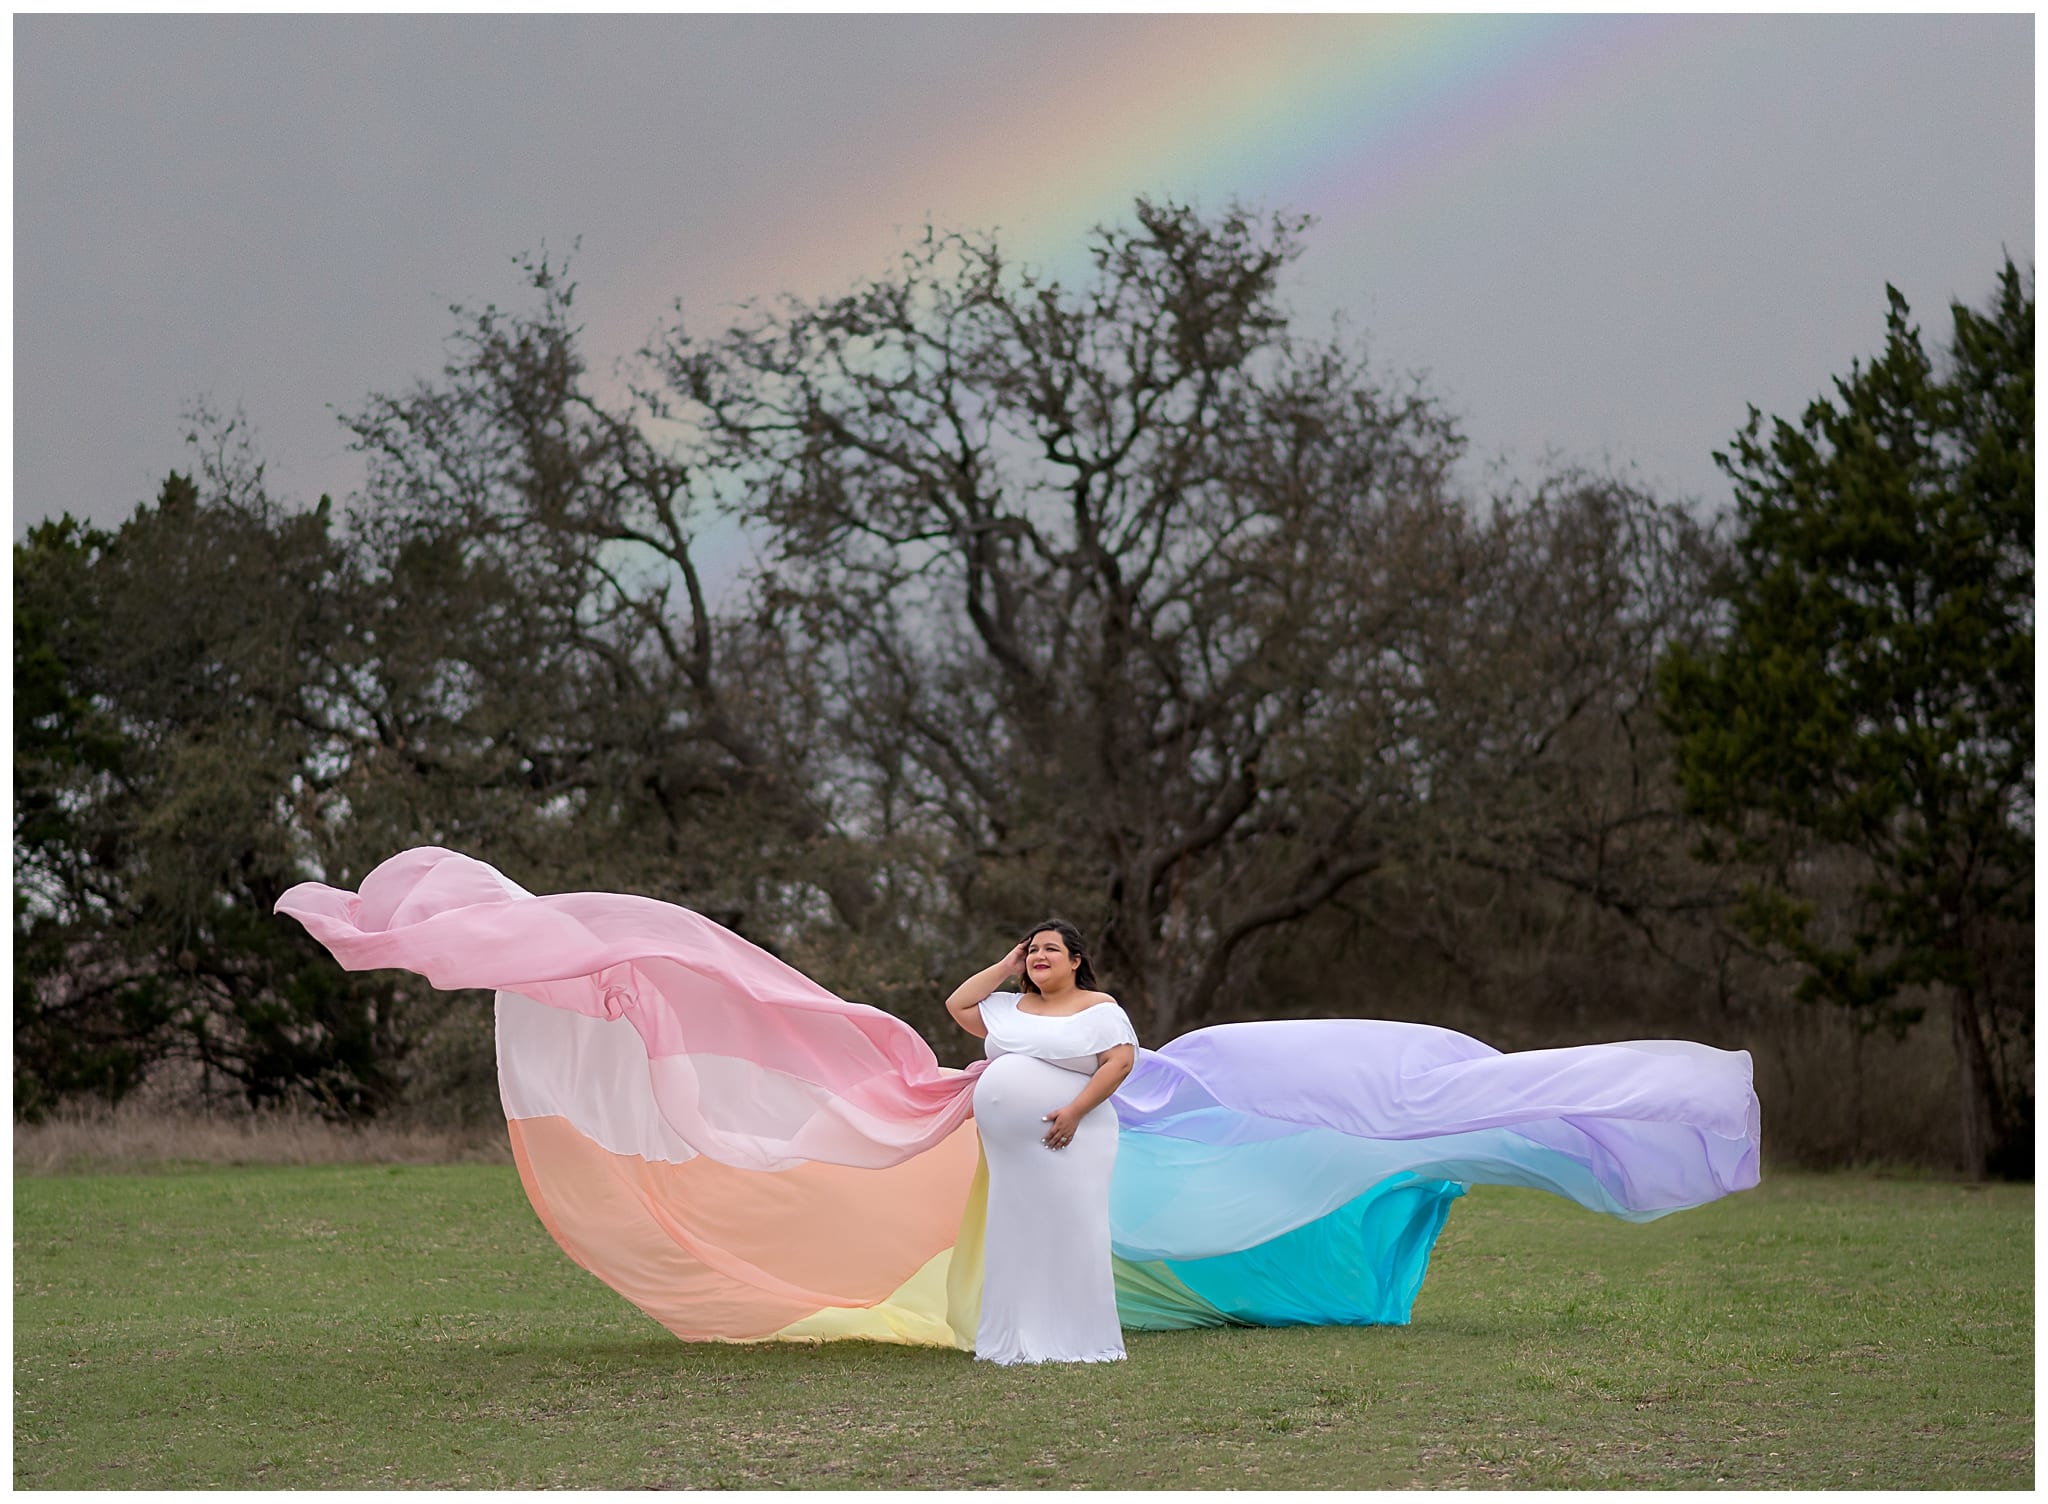 Maternity photo in flying rainbow dress.